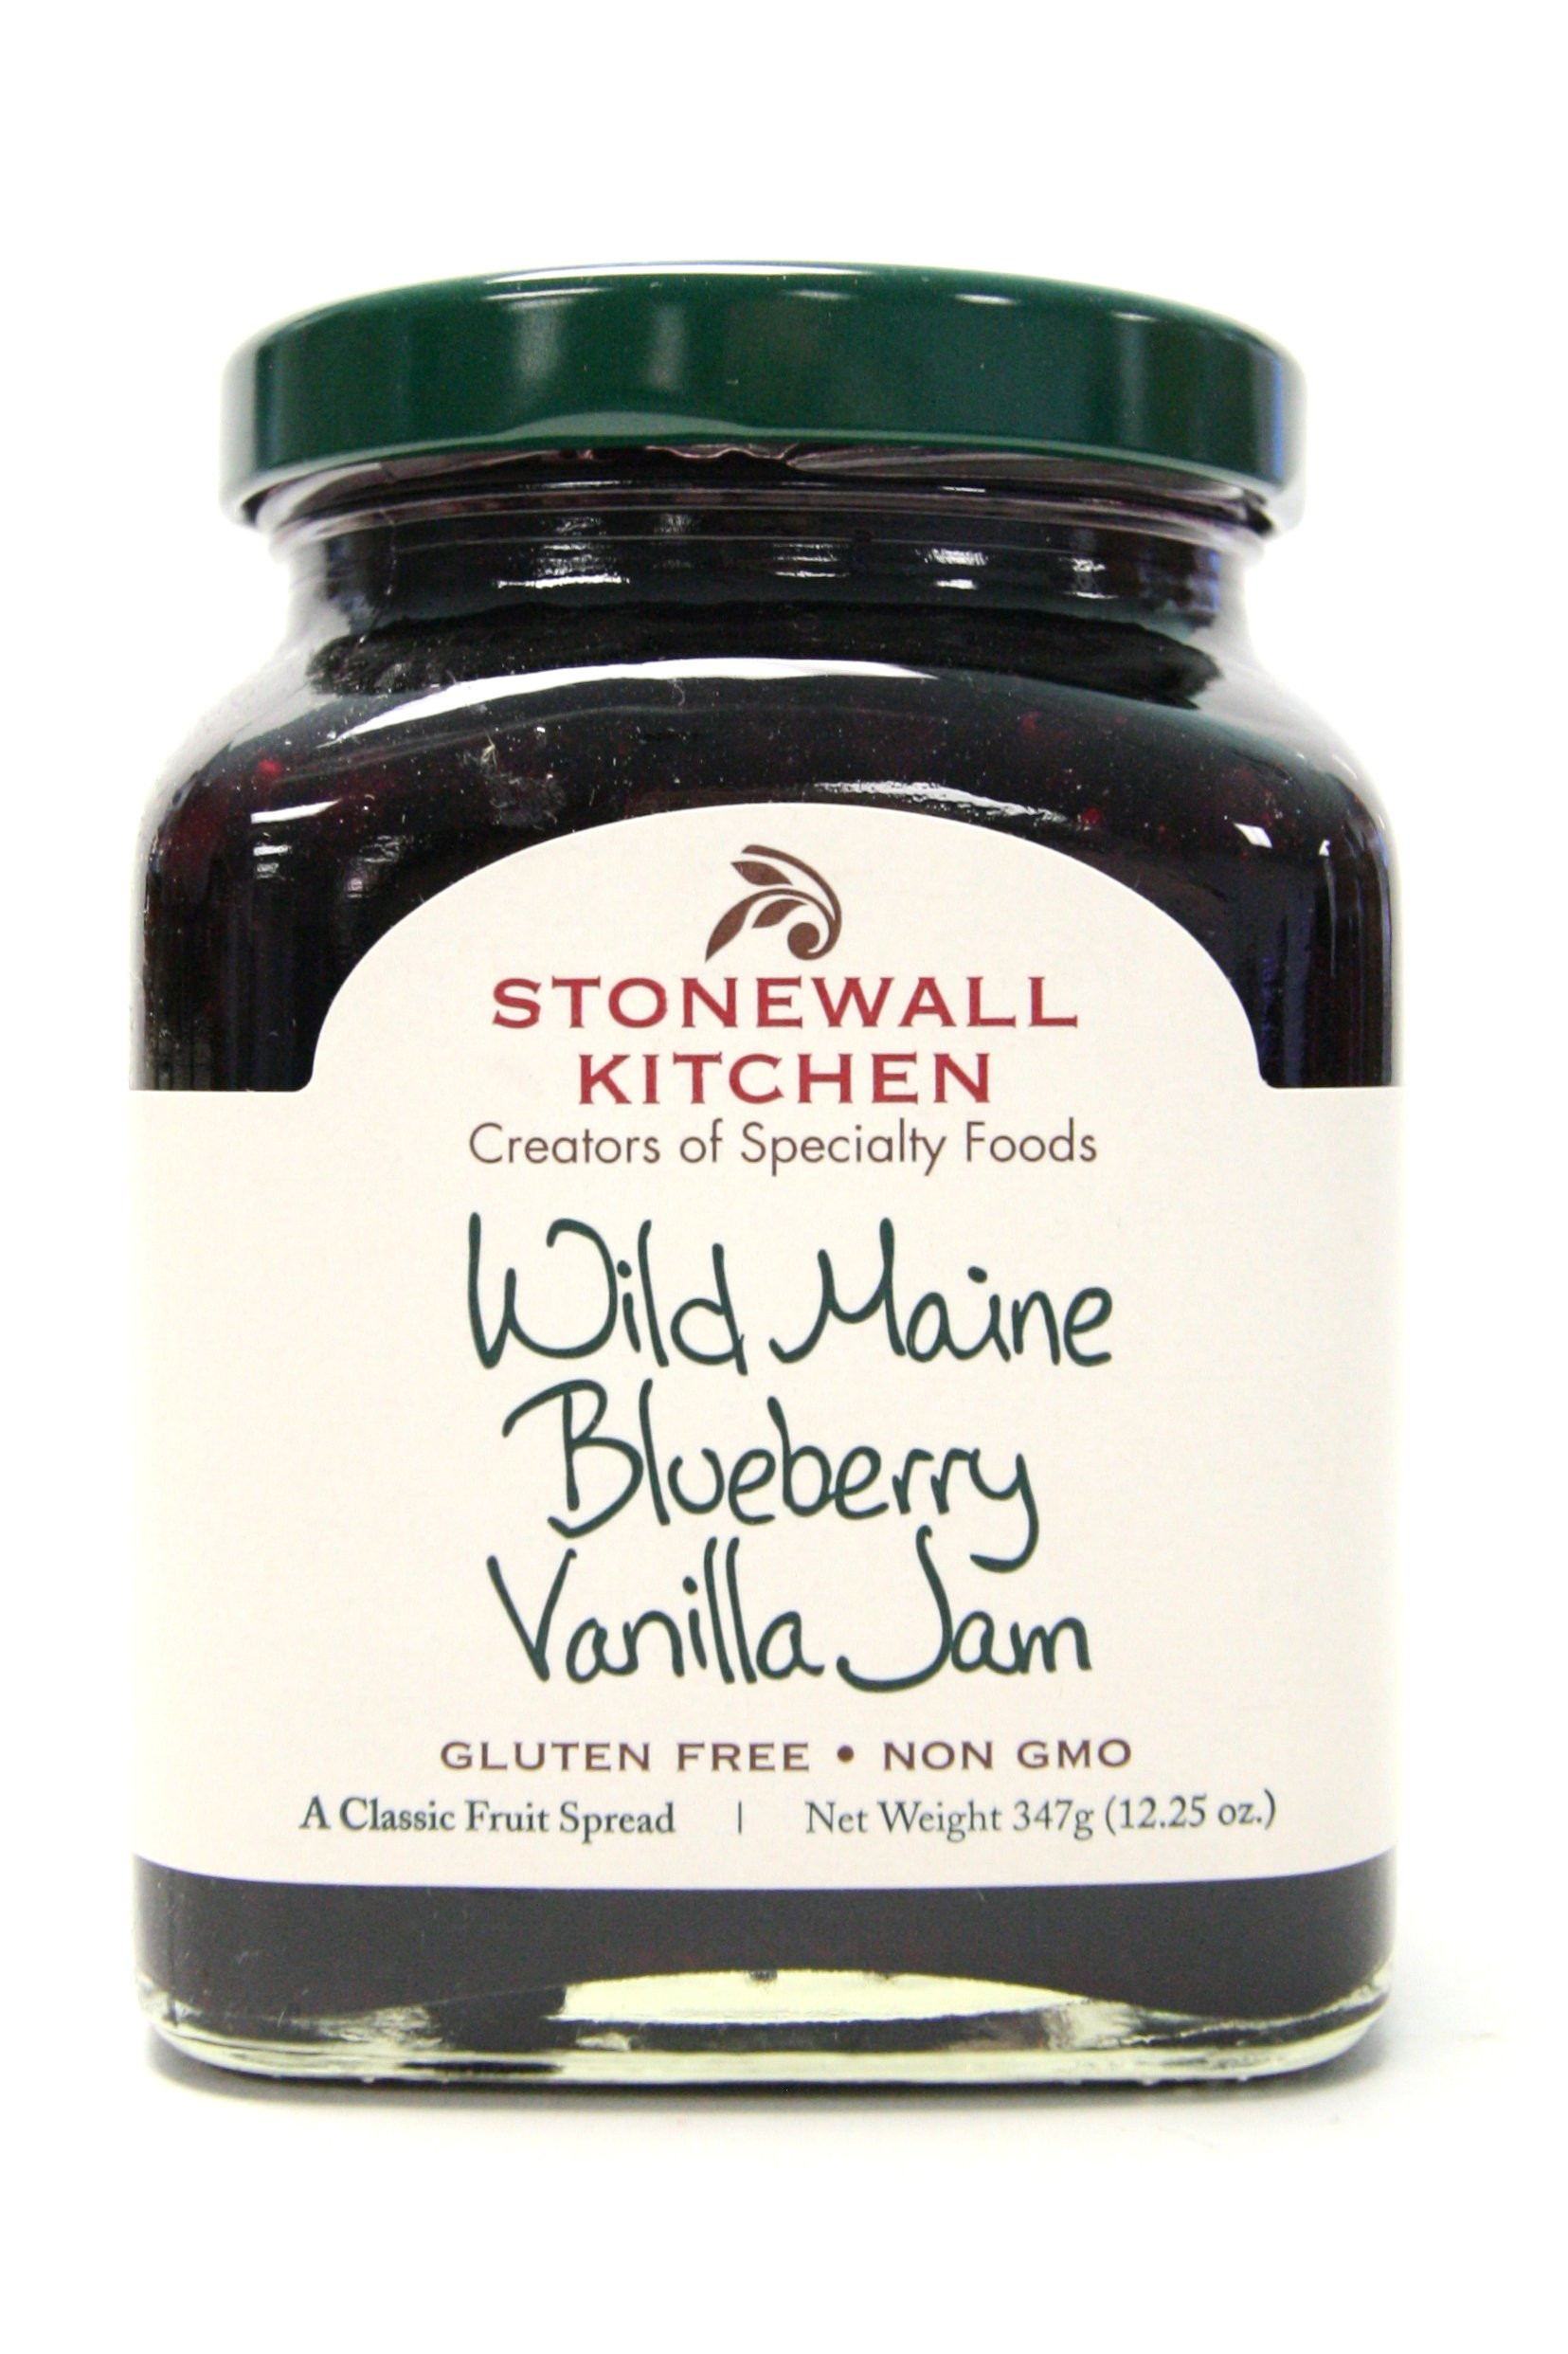 Stonewall Kitchen Blueberry Jam
 Stonewall Kitchen Wild Maine Blueberry Vanilla Jam